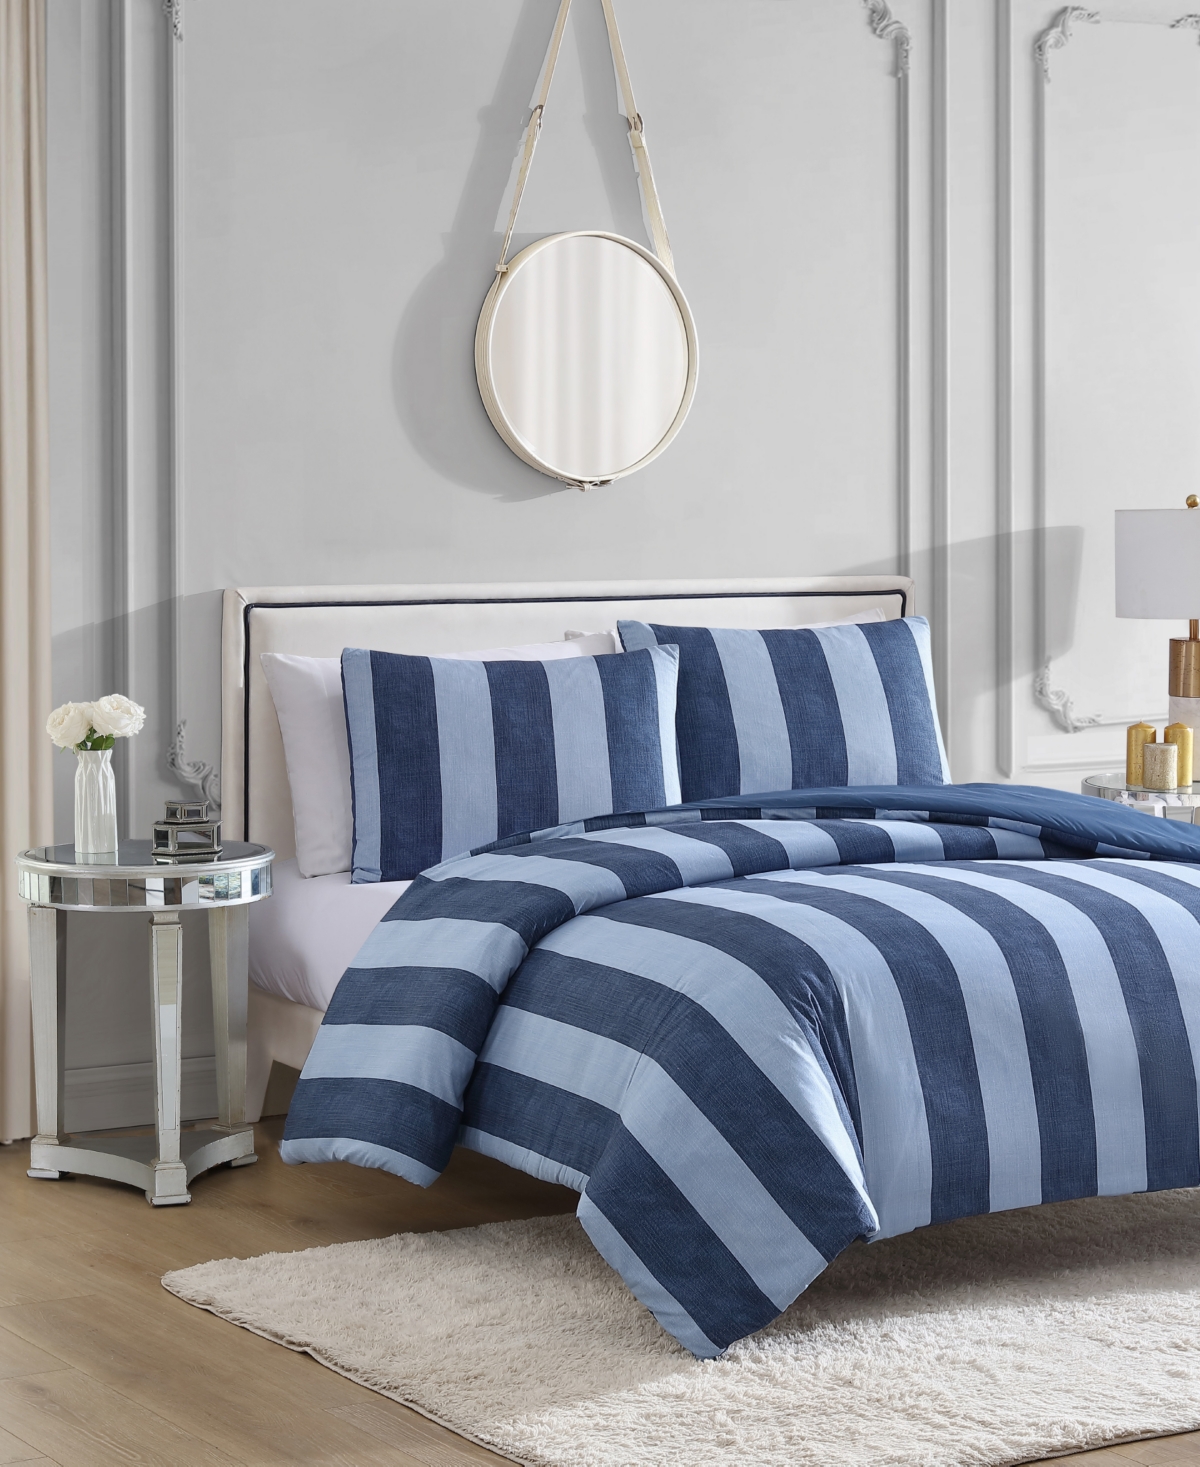 Juicy Couture Denim Stripe 3-pc. Reversible Comforter Set, Full/queen In Blue Stripe